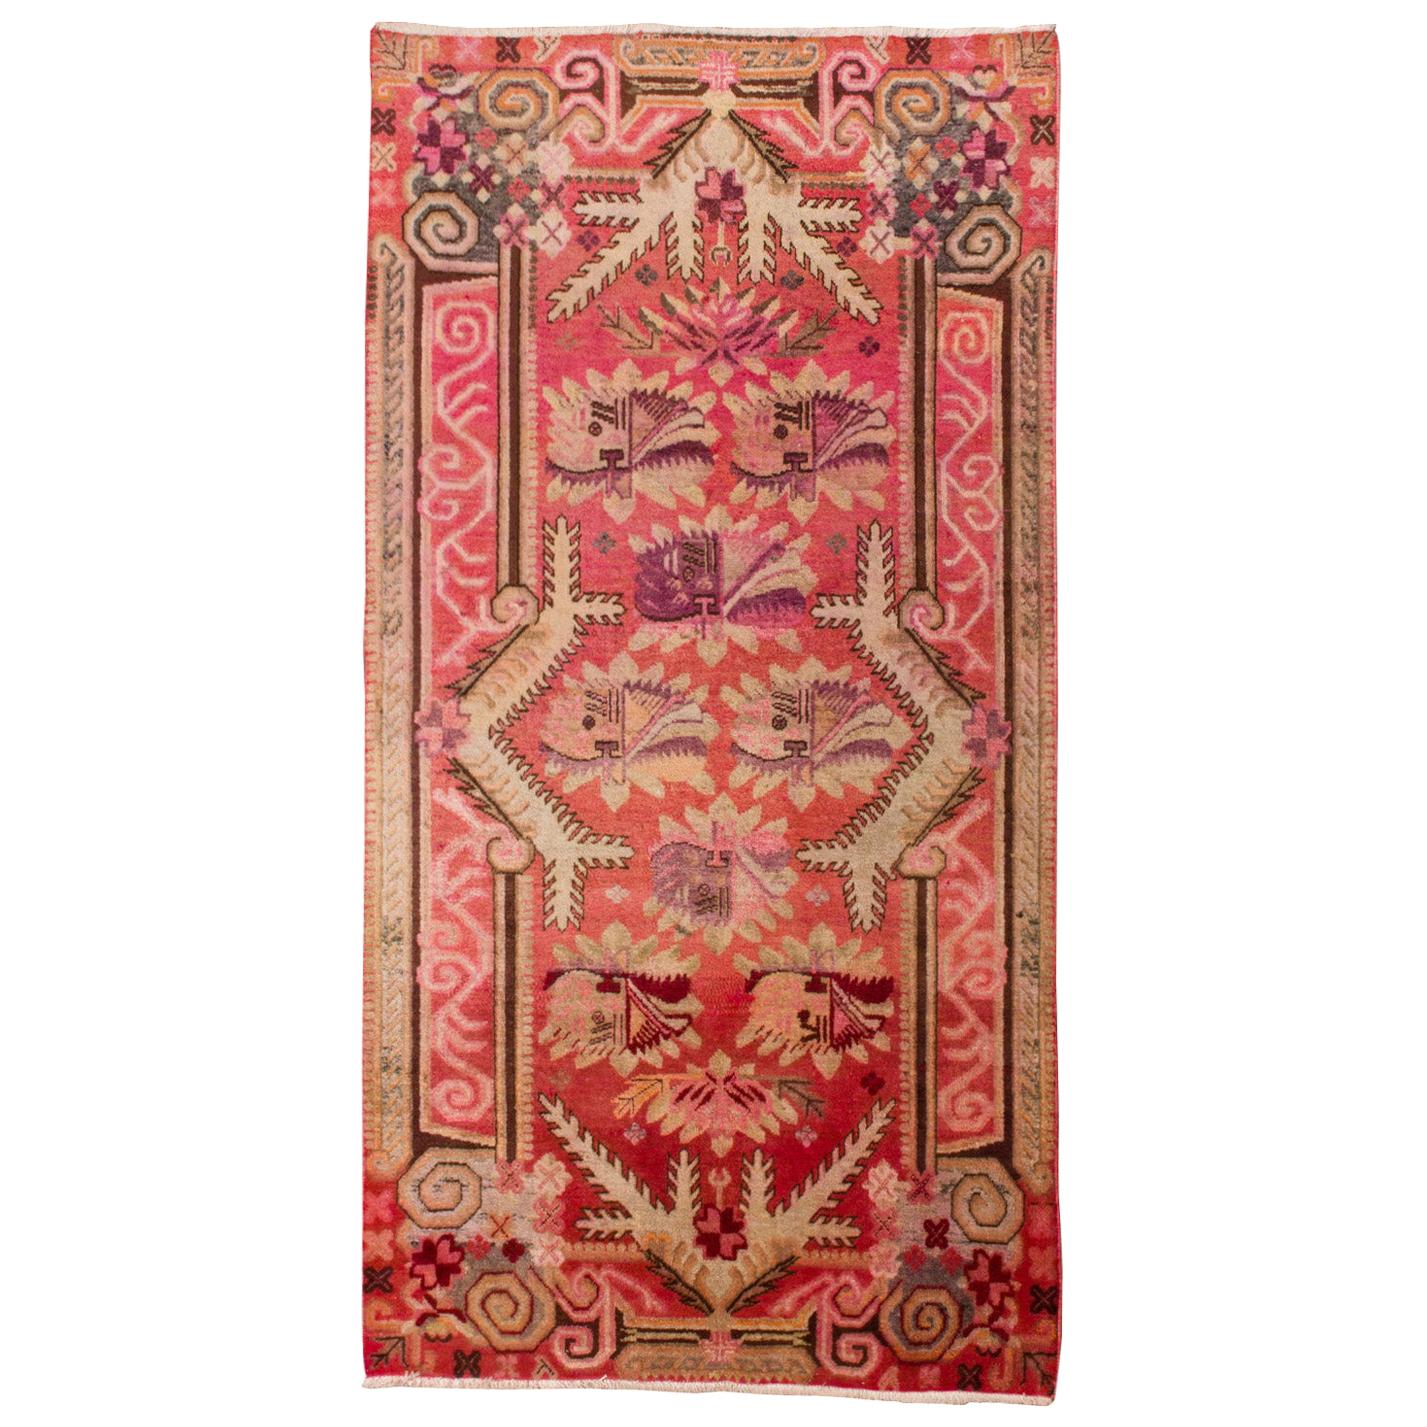  Samarkanda-Teppich in Rosa mit interessantem Preis